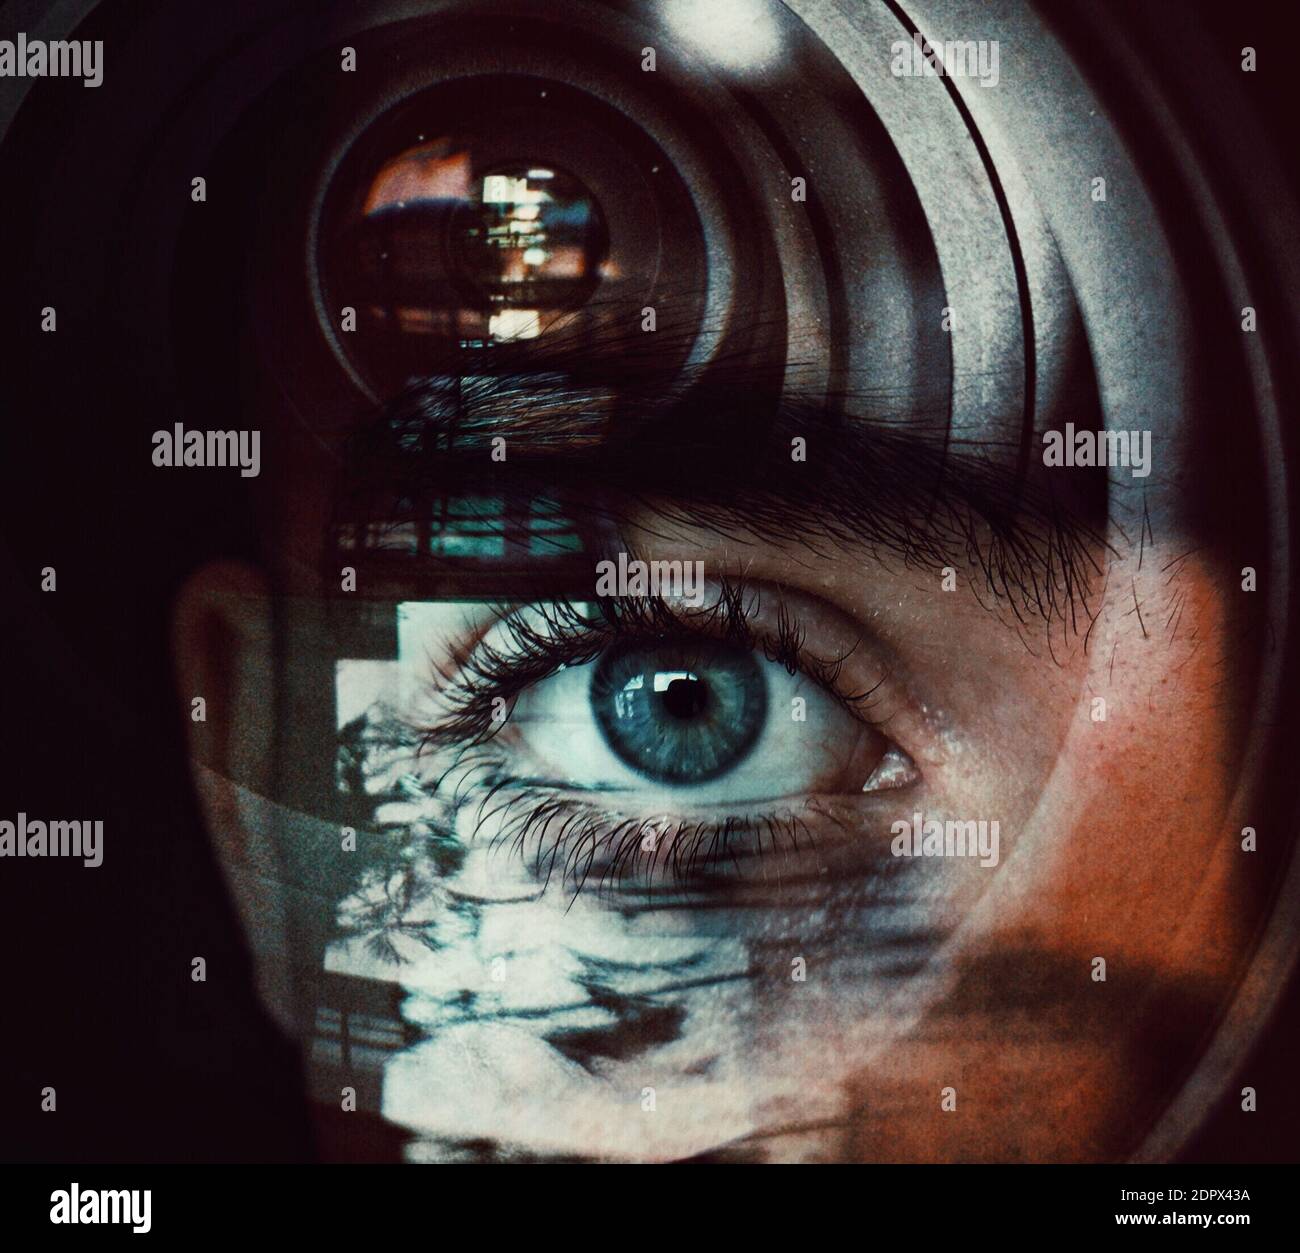 Double Exposure Image Of Human Eye And Camera Lens Stock Photo - Alamy